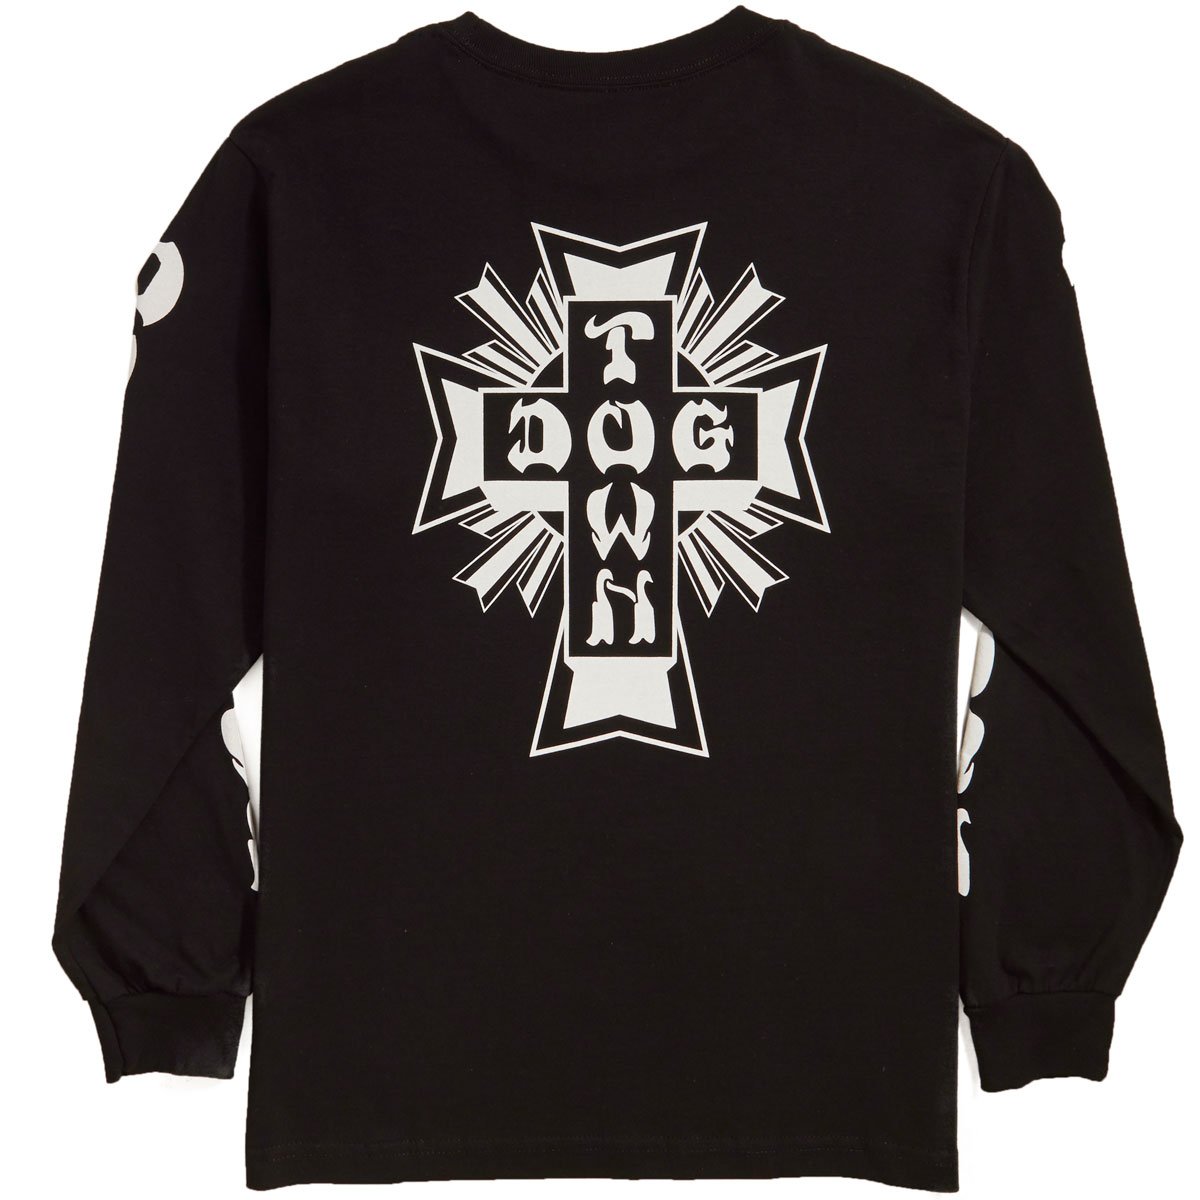 Dogtown Cross Logo Long Sleeve T-Shirt - Black/White image 1